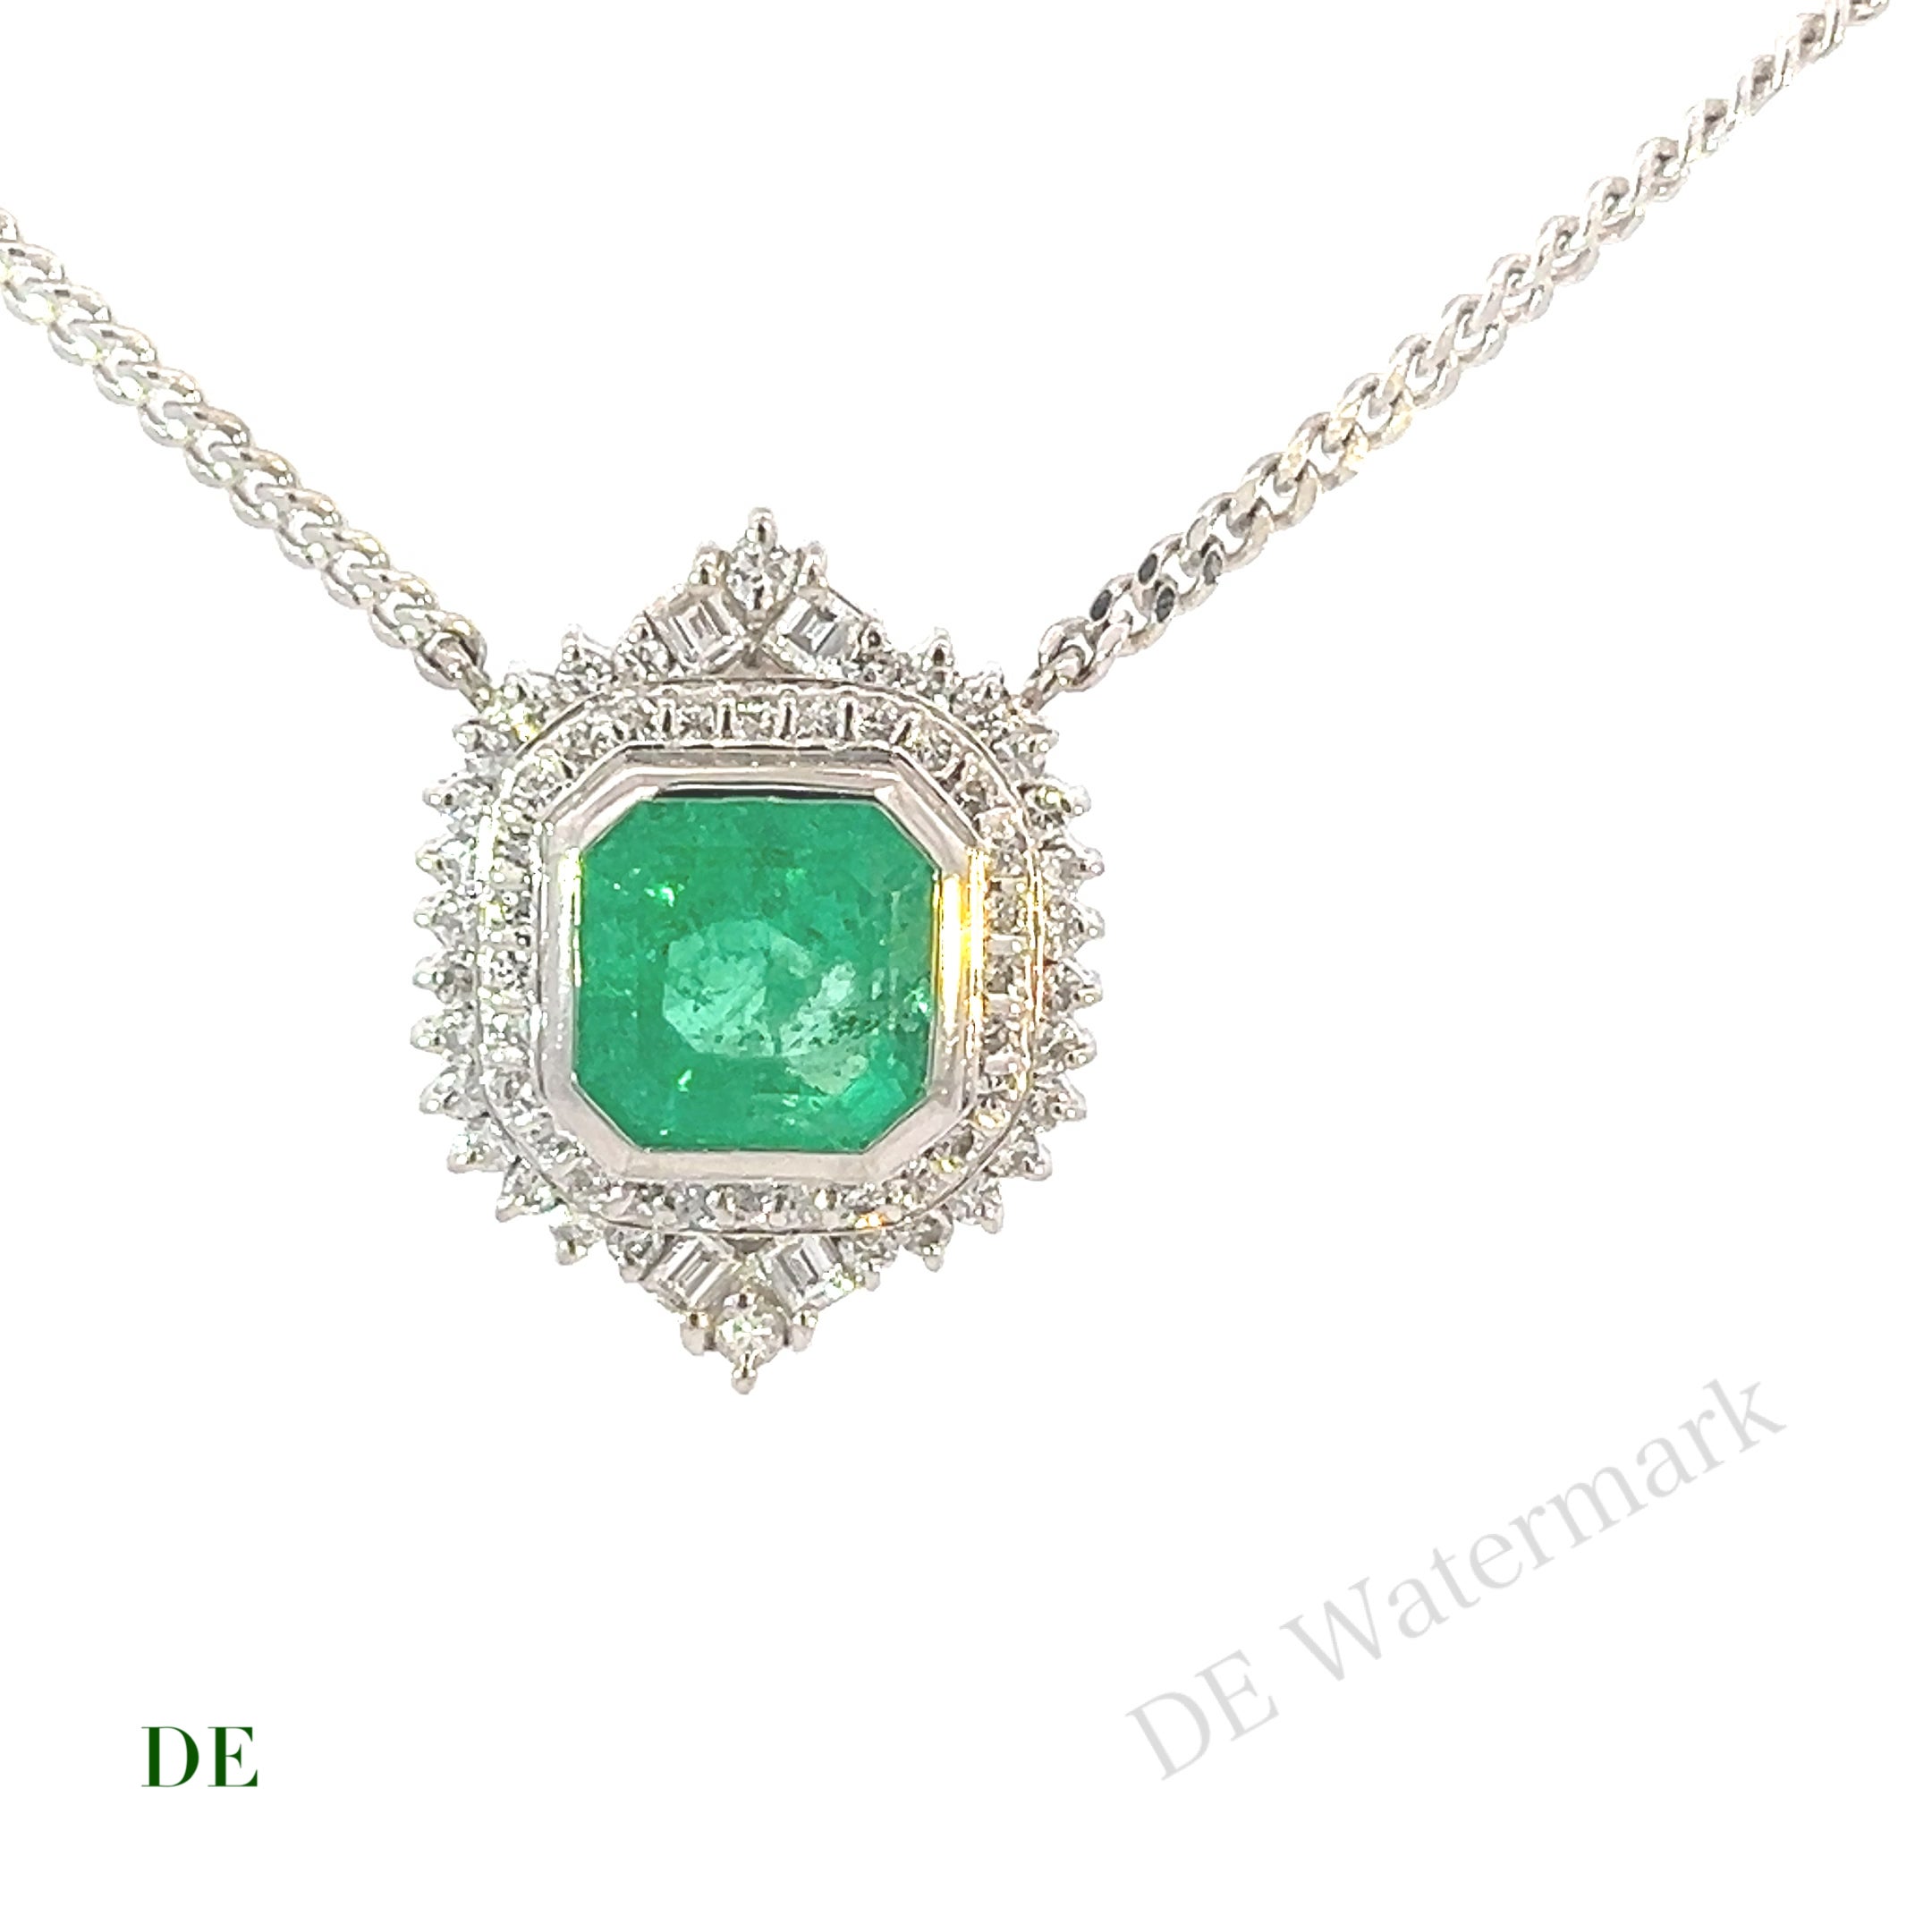 Stunning Platinum Vivid Green Emerald 2.7 crt with 0.57 crt Diamonds Necklace